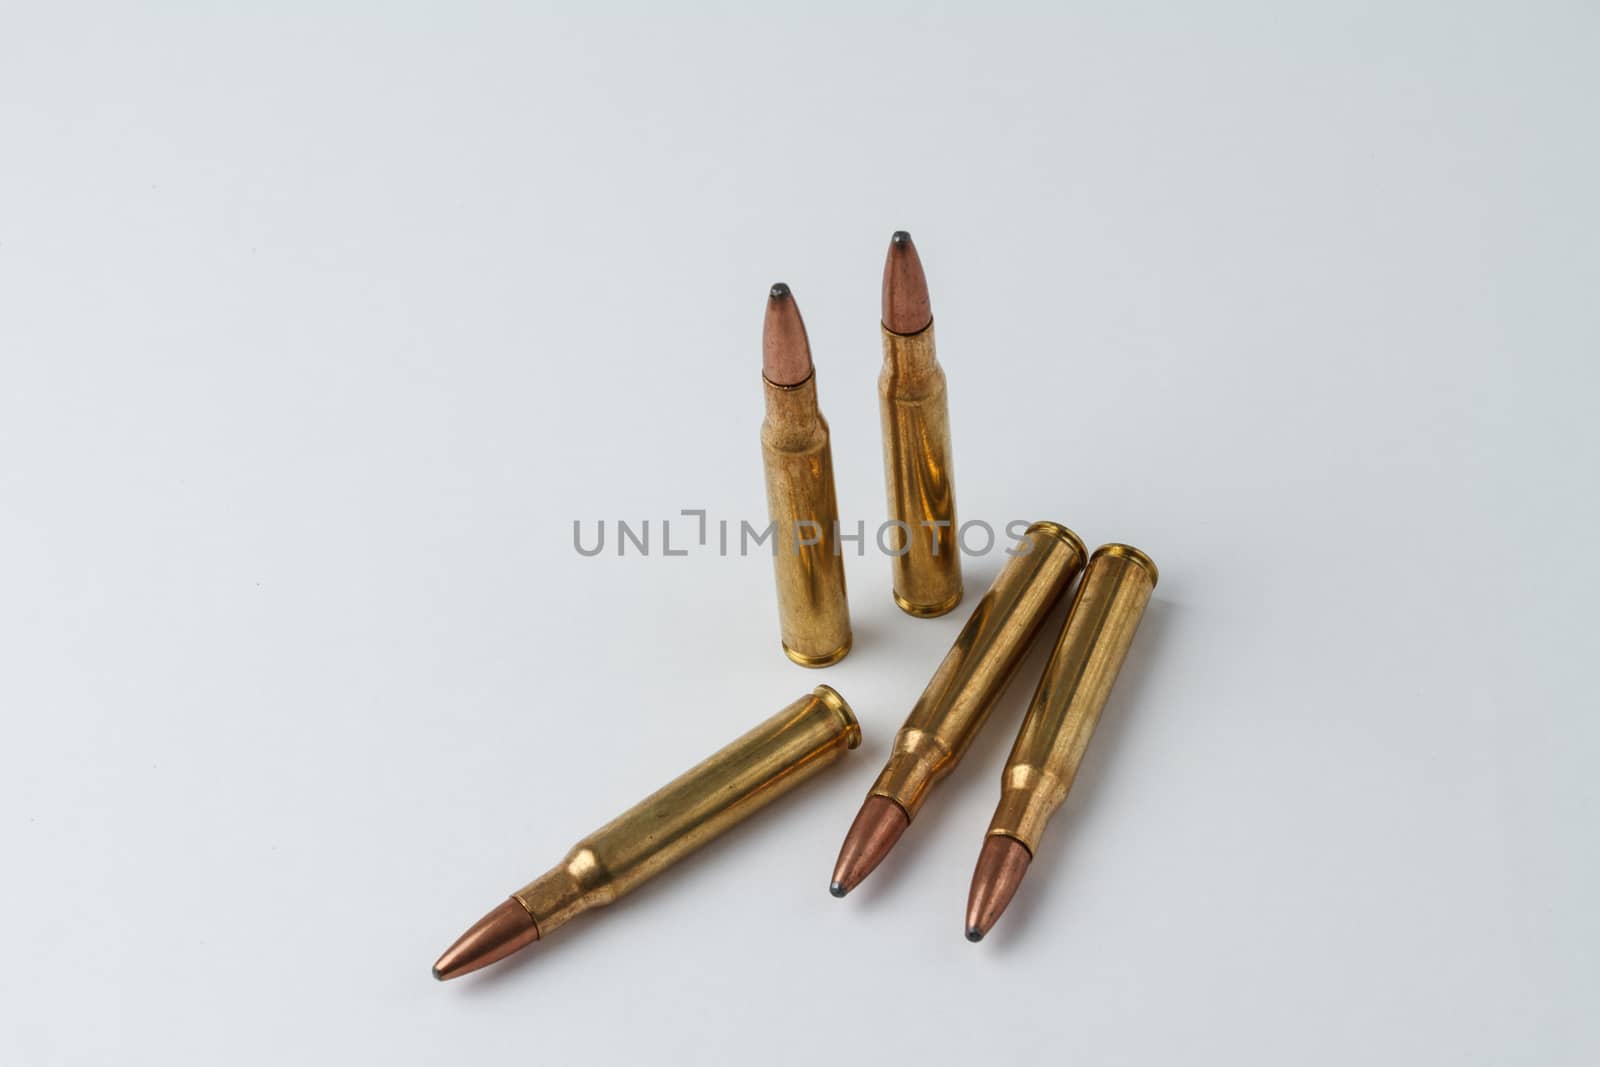 Five .30-06 caliber hunting rifle ammunition cartridges in a random arrangement